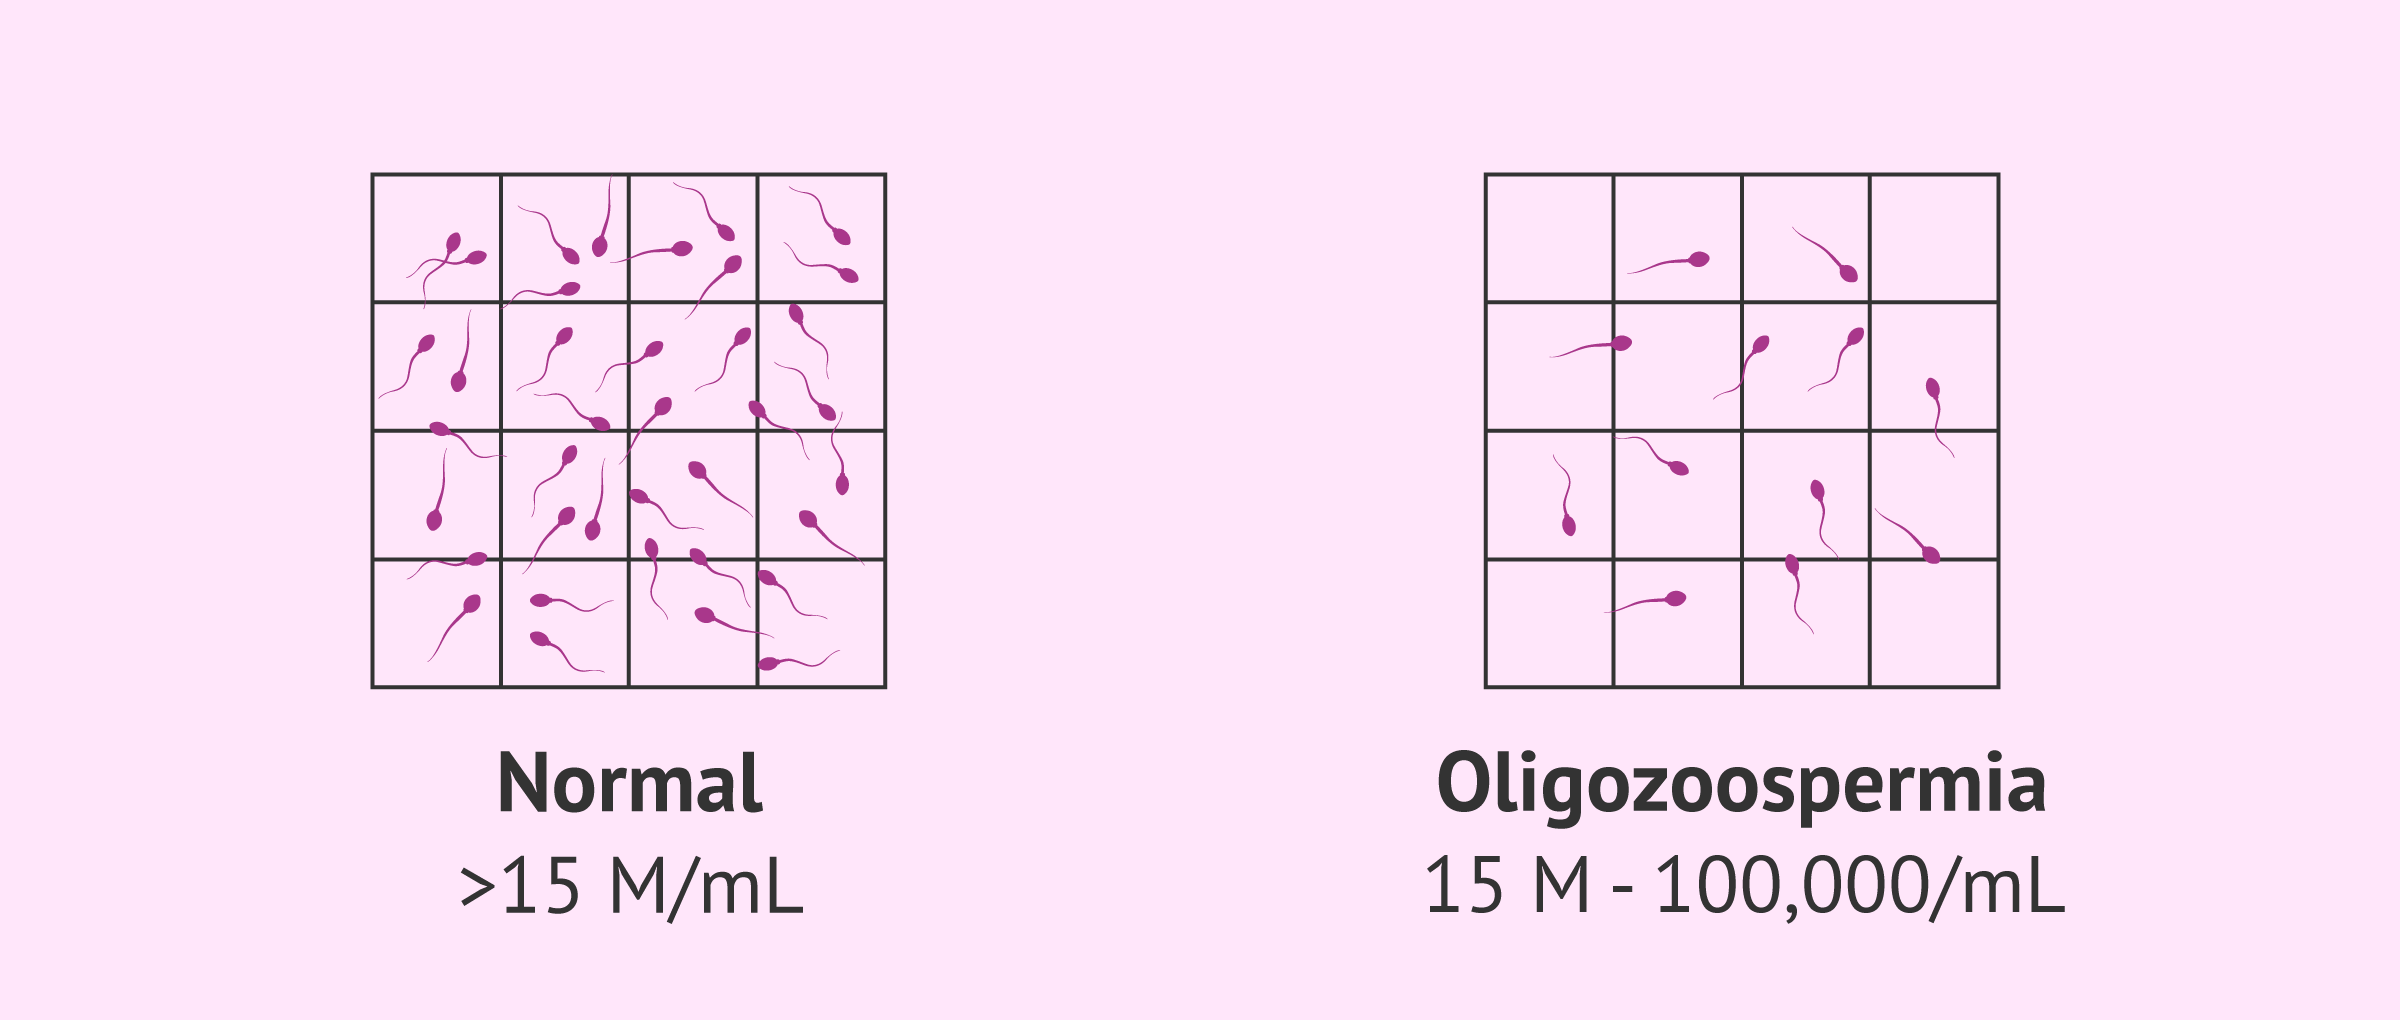 Normal semen sample and oligozoospermic sample